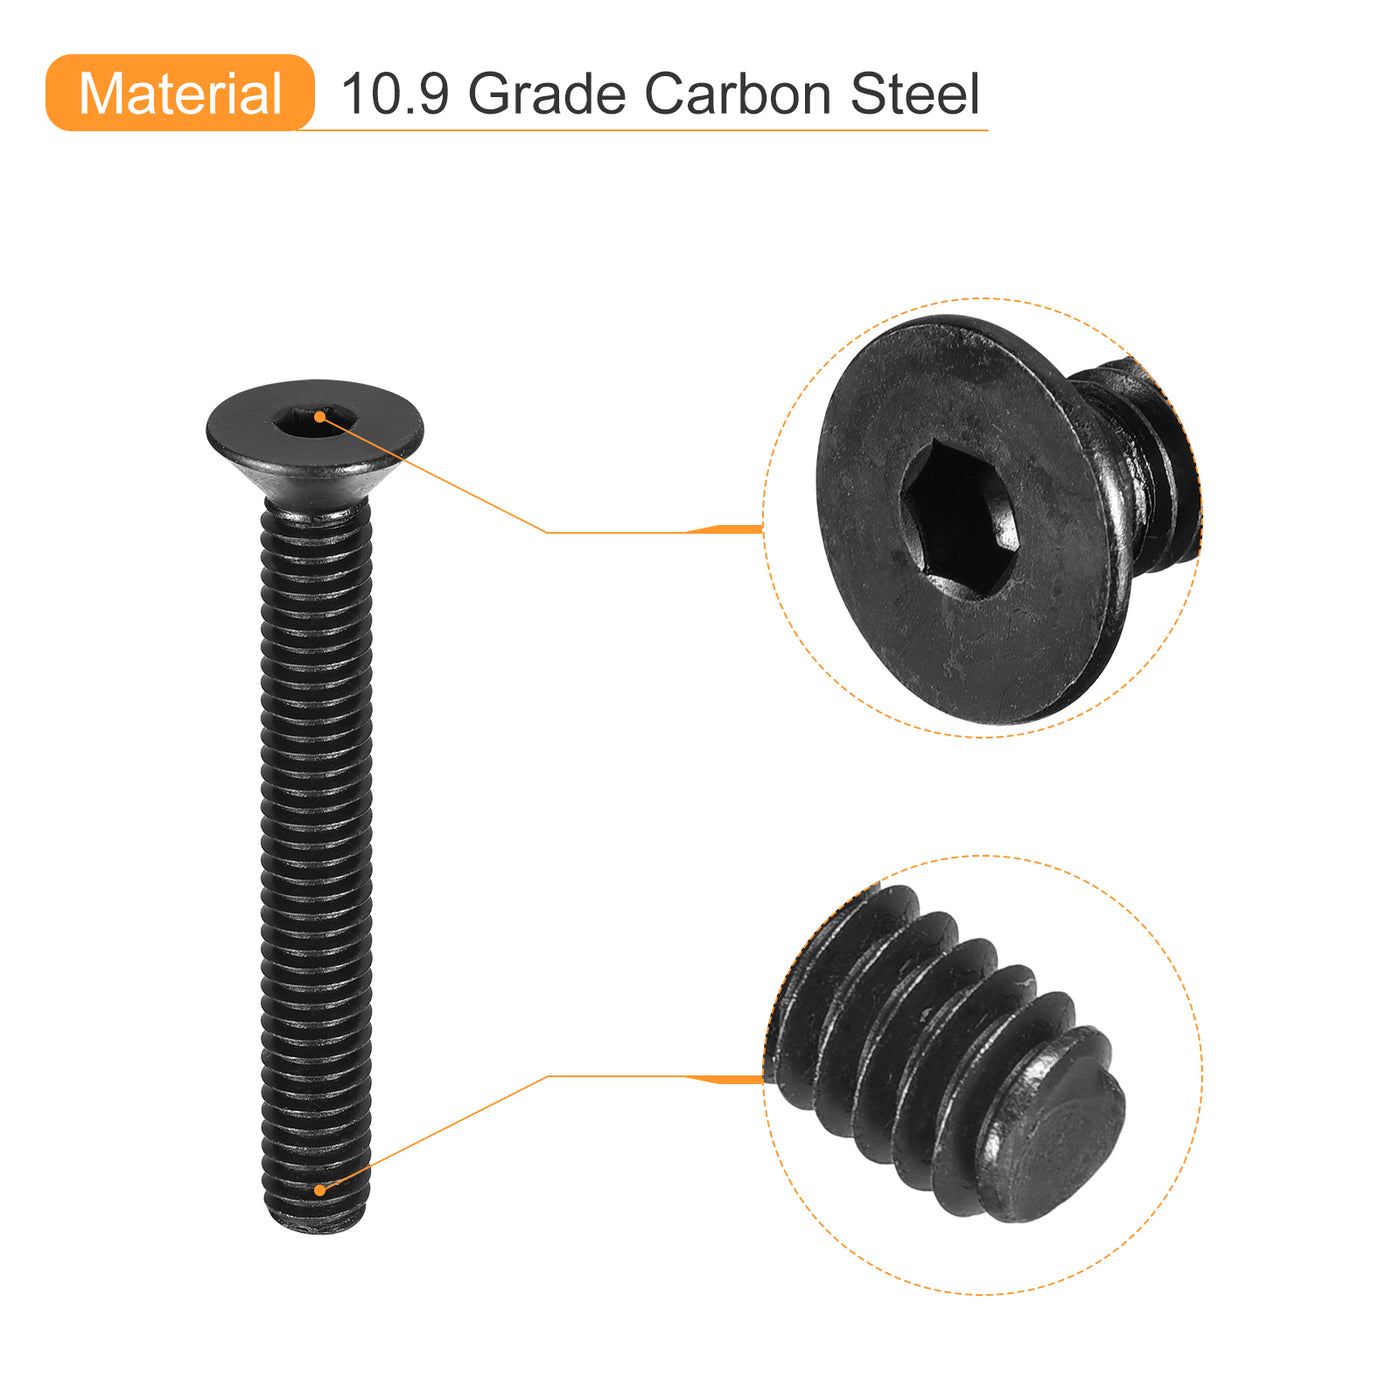 uxcell Uxcell 5/16-18x2-1/2" Flat Head Socket Cap Screws, 10.9 Grade Carbon Steel, 20PCS